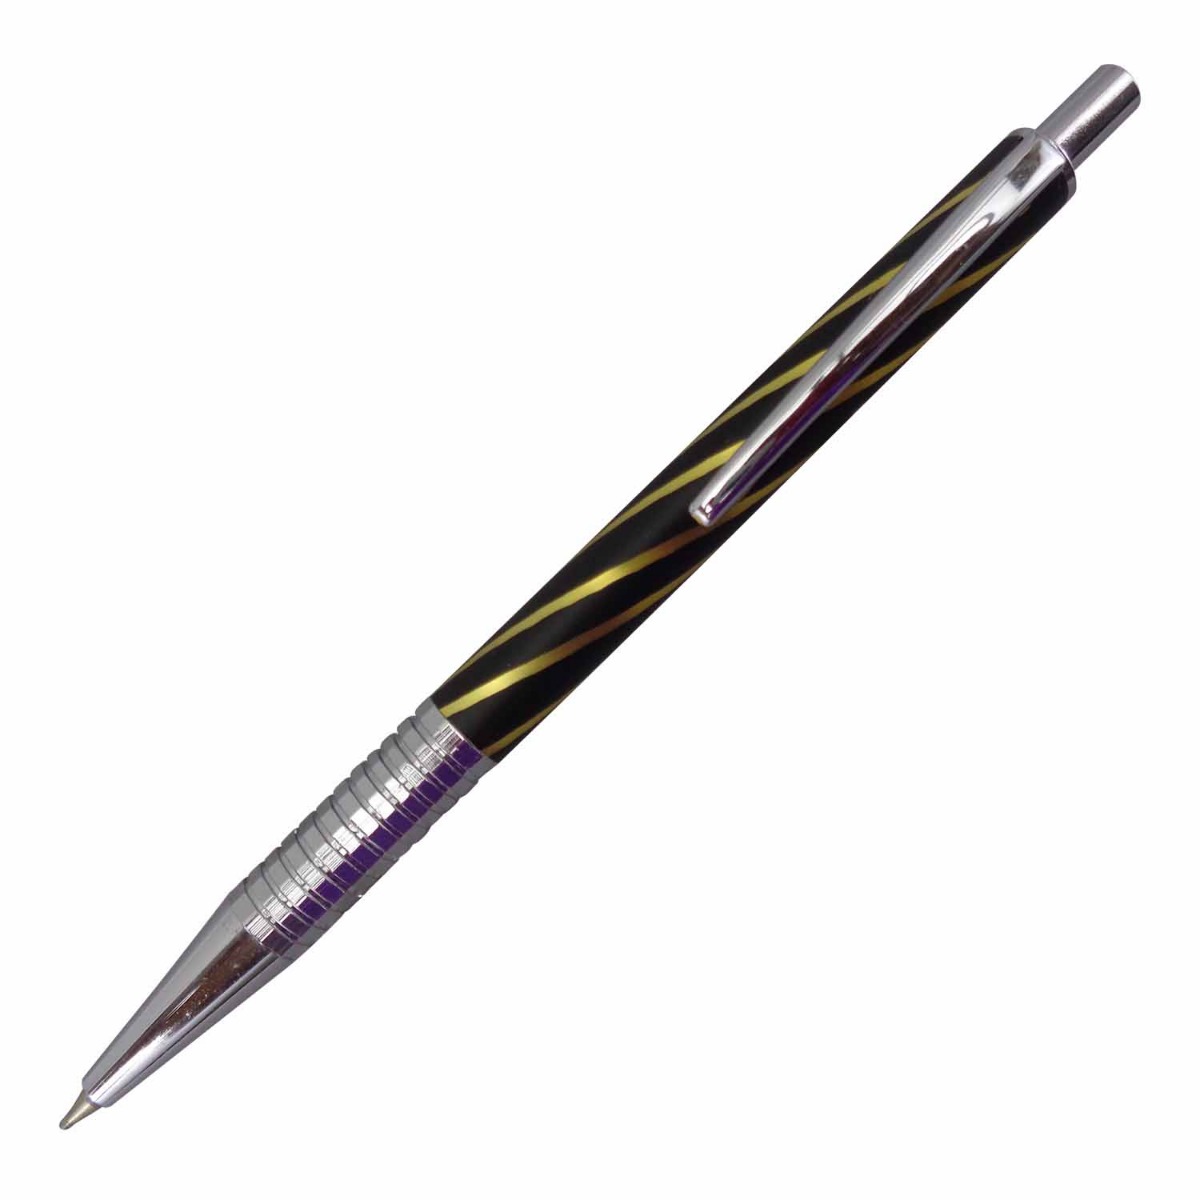 Penhouse Model:15731 Slim Type Light Green and Black Color Twist Design Body Click Type Fine Tip Ball Pen